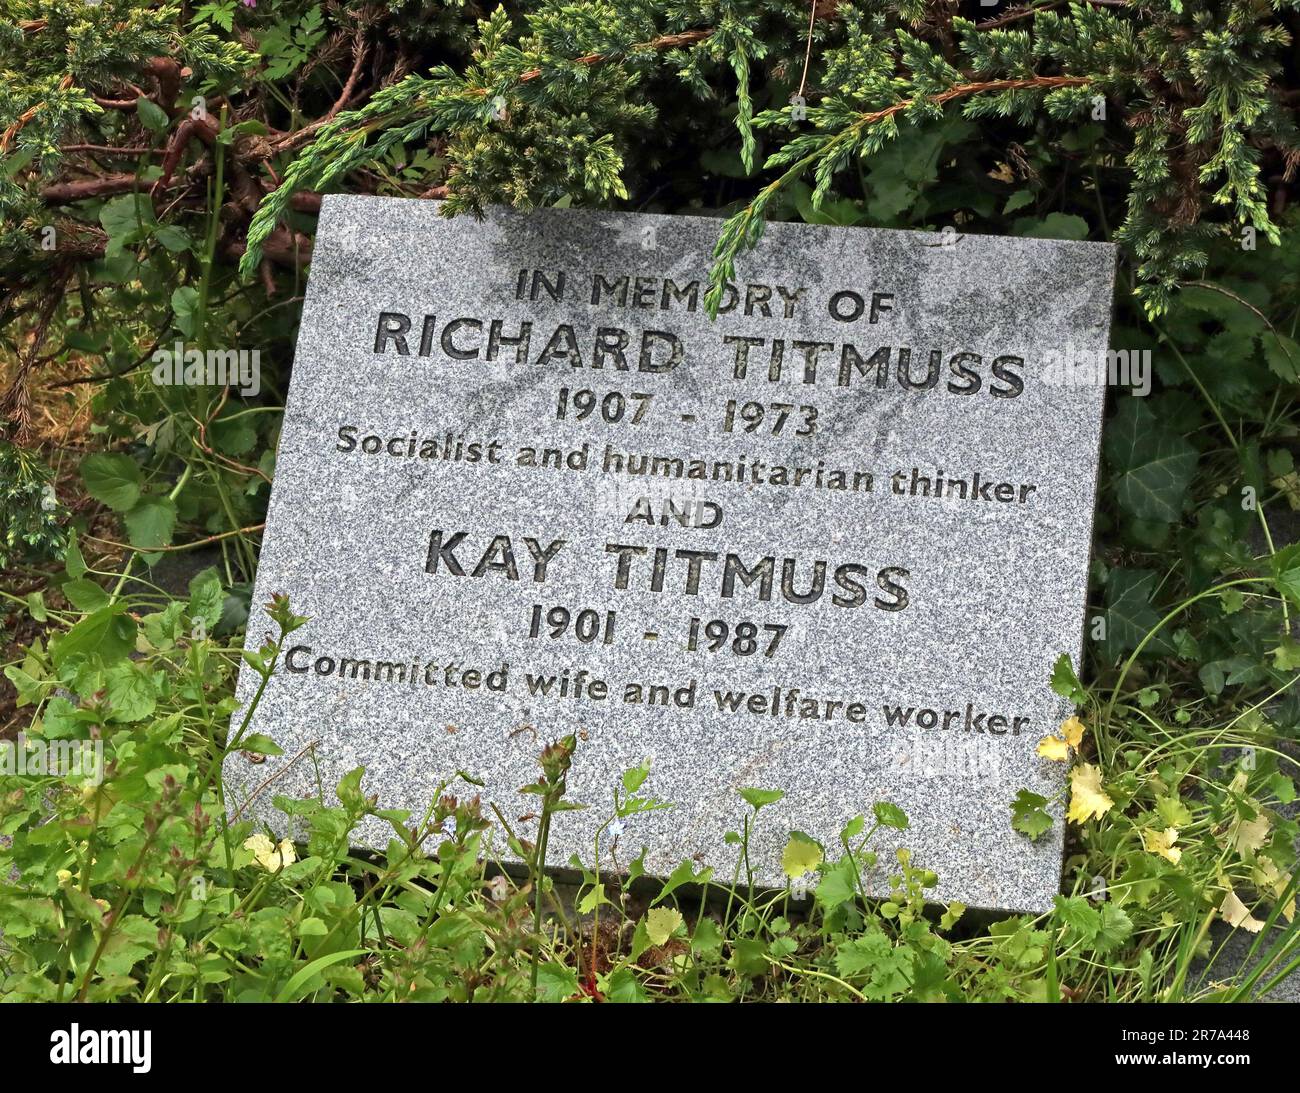 Grave of Richard Titmuss, Kay Titmuss,1907-1973 Socialist & humanitarian thinker, buried in Highgate Cemetery, London, Swain's Lane, N6 6PJ Stock Photo